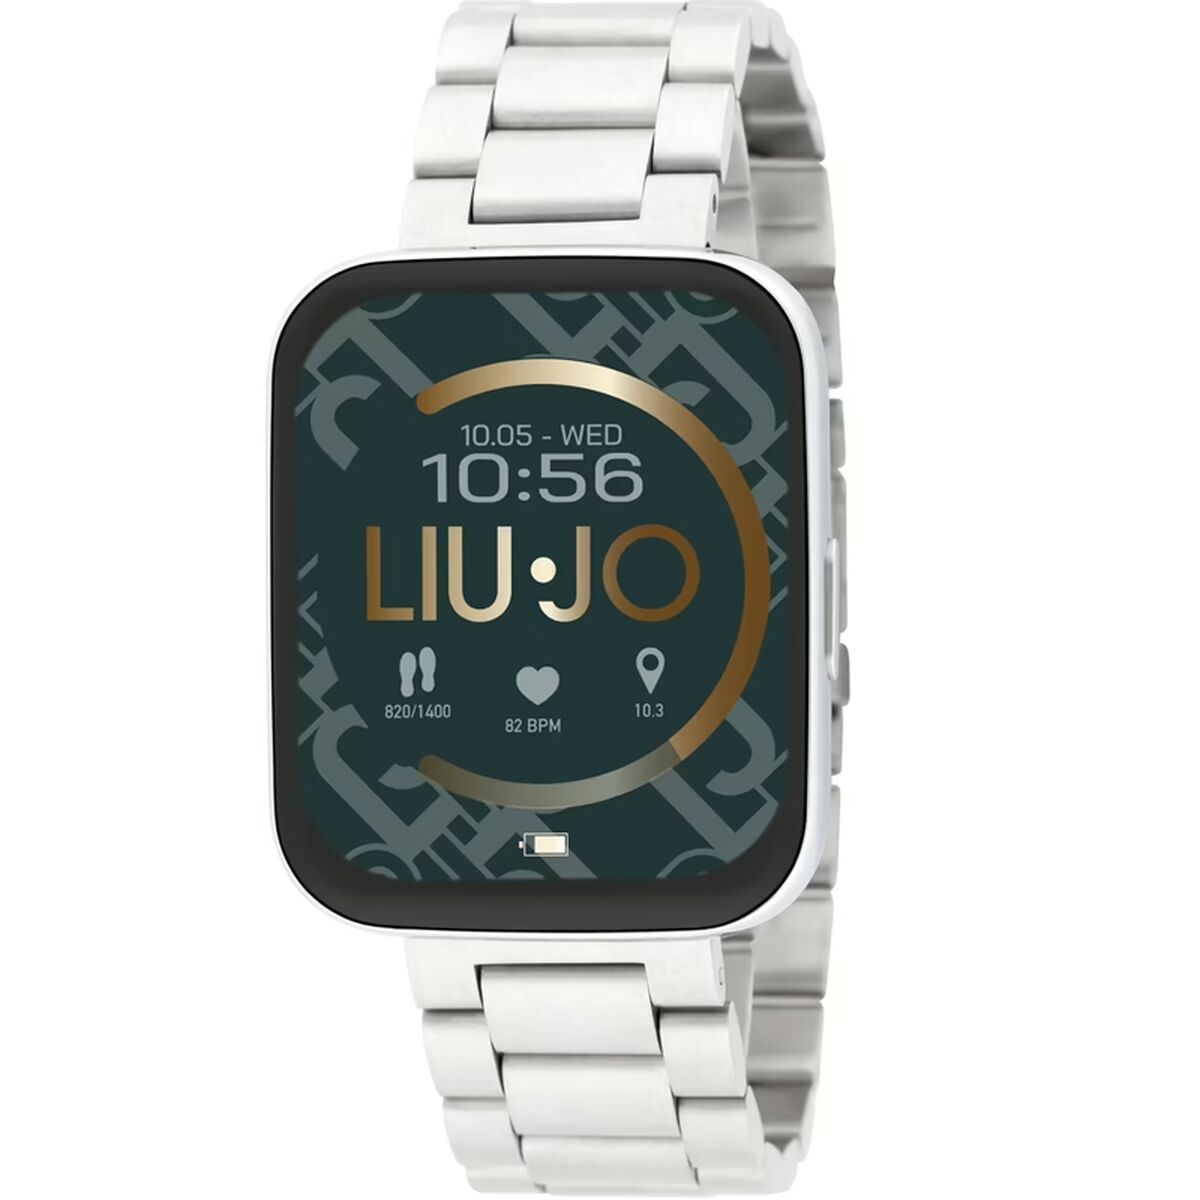 Kaufe Smartwatch LIU JO SWLJ085 bei AWK Flagship um € 180.00